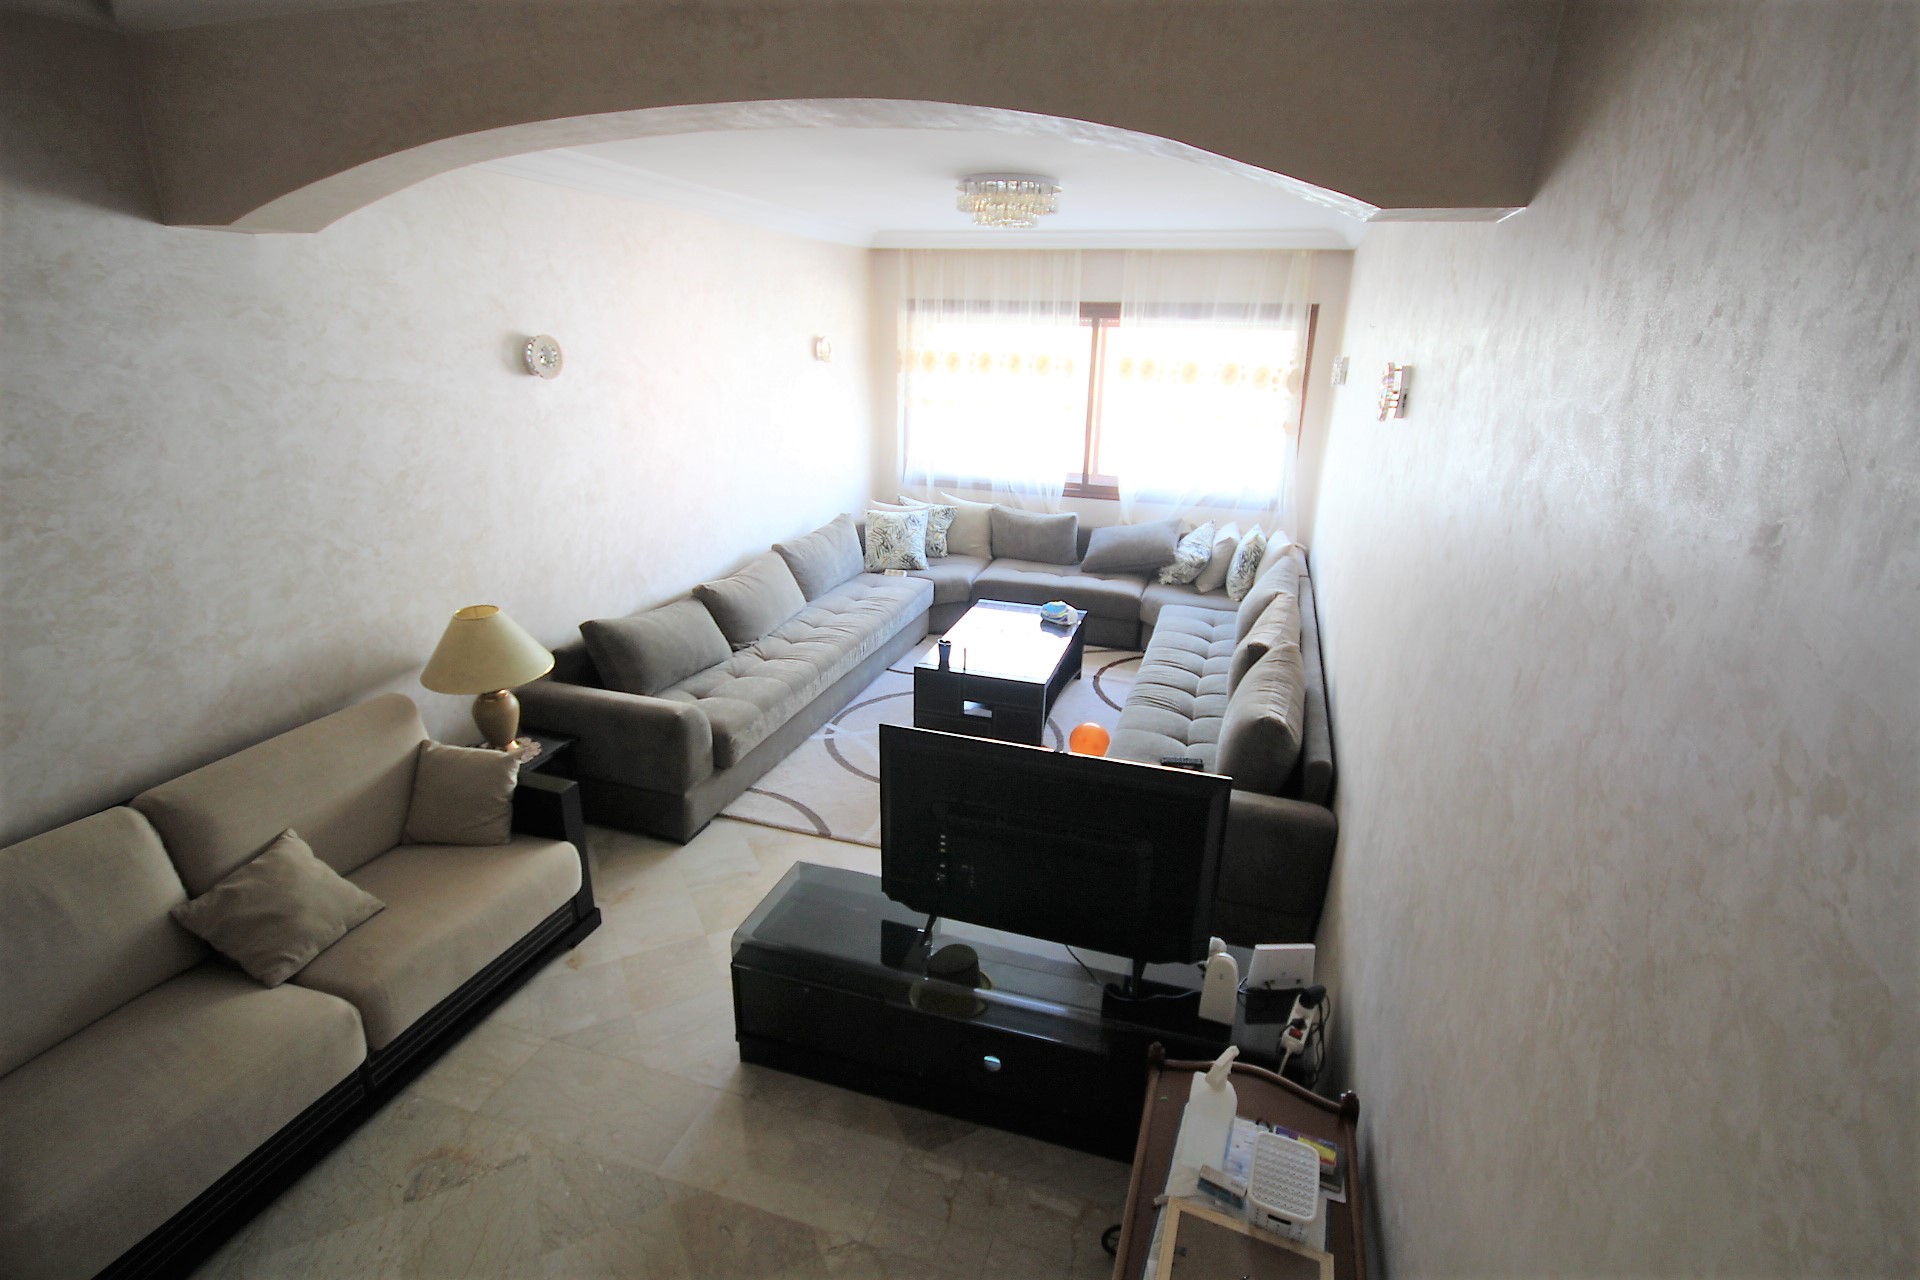 Maroc, Casablanca, 2 mars, Loue parfait meublé 3 chambres balcon